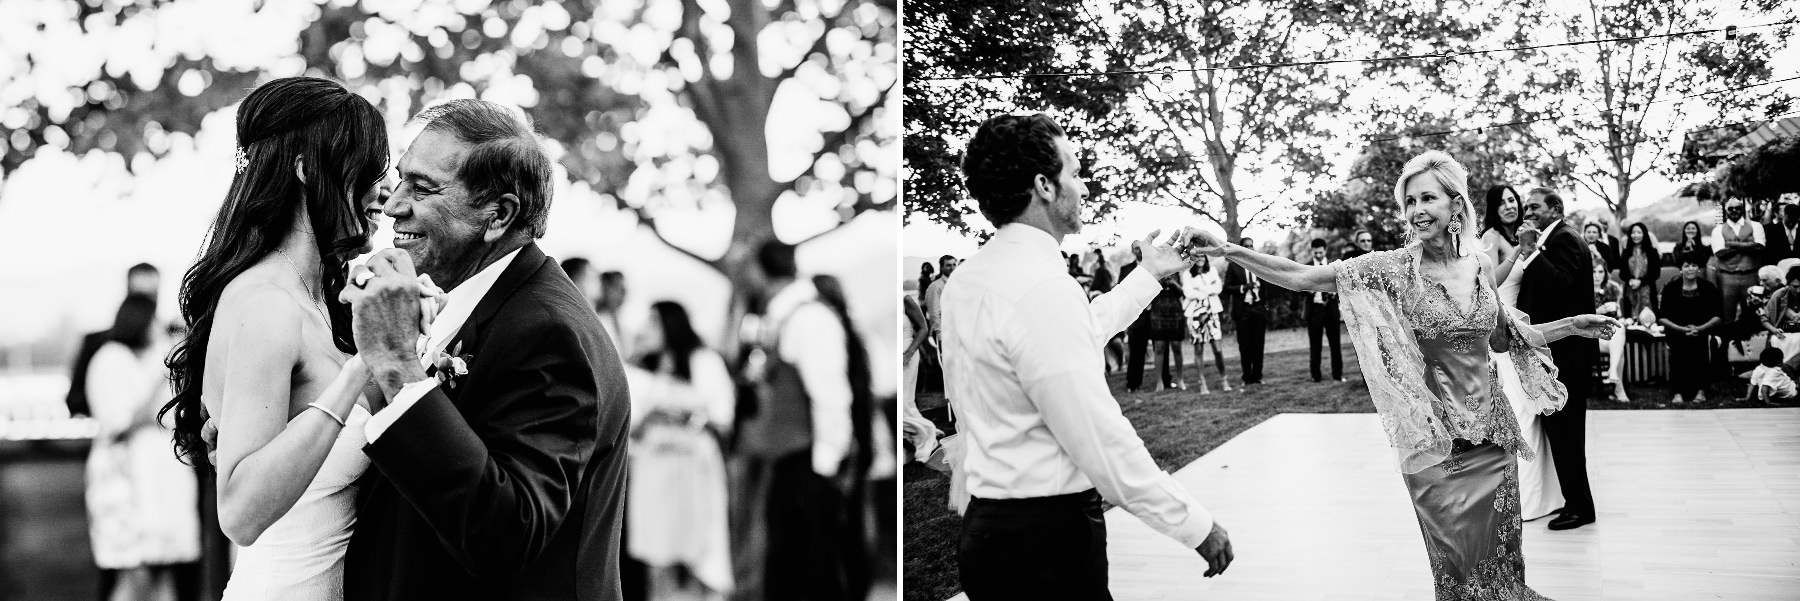 stryker-winery-wedding-photo-035